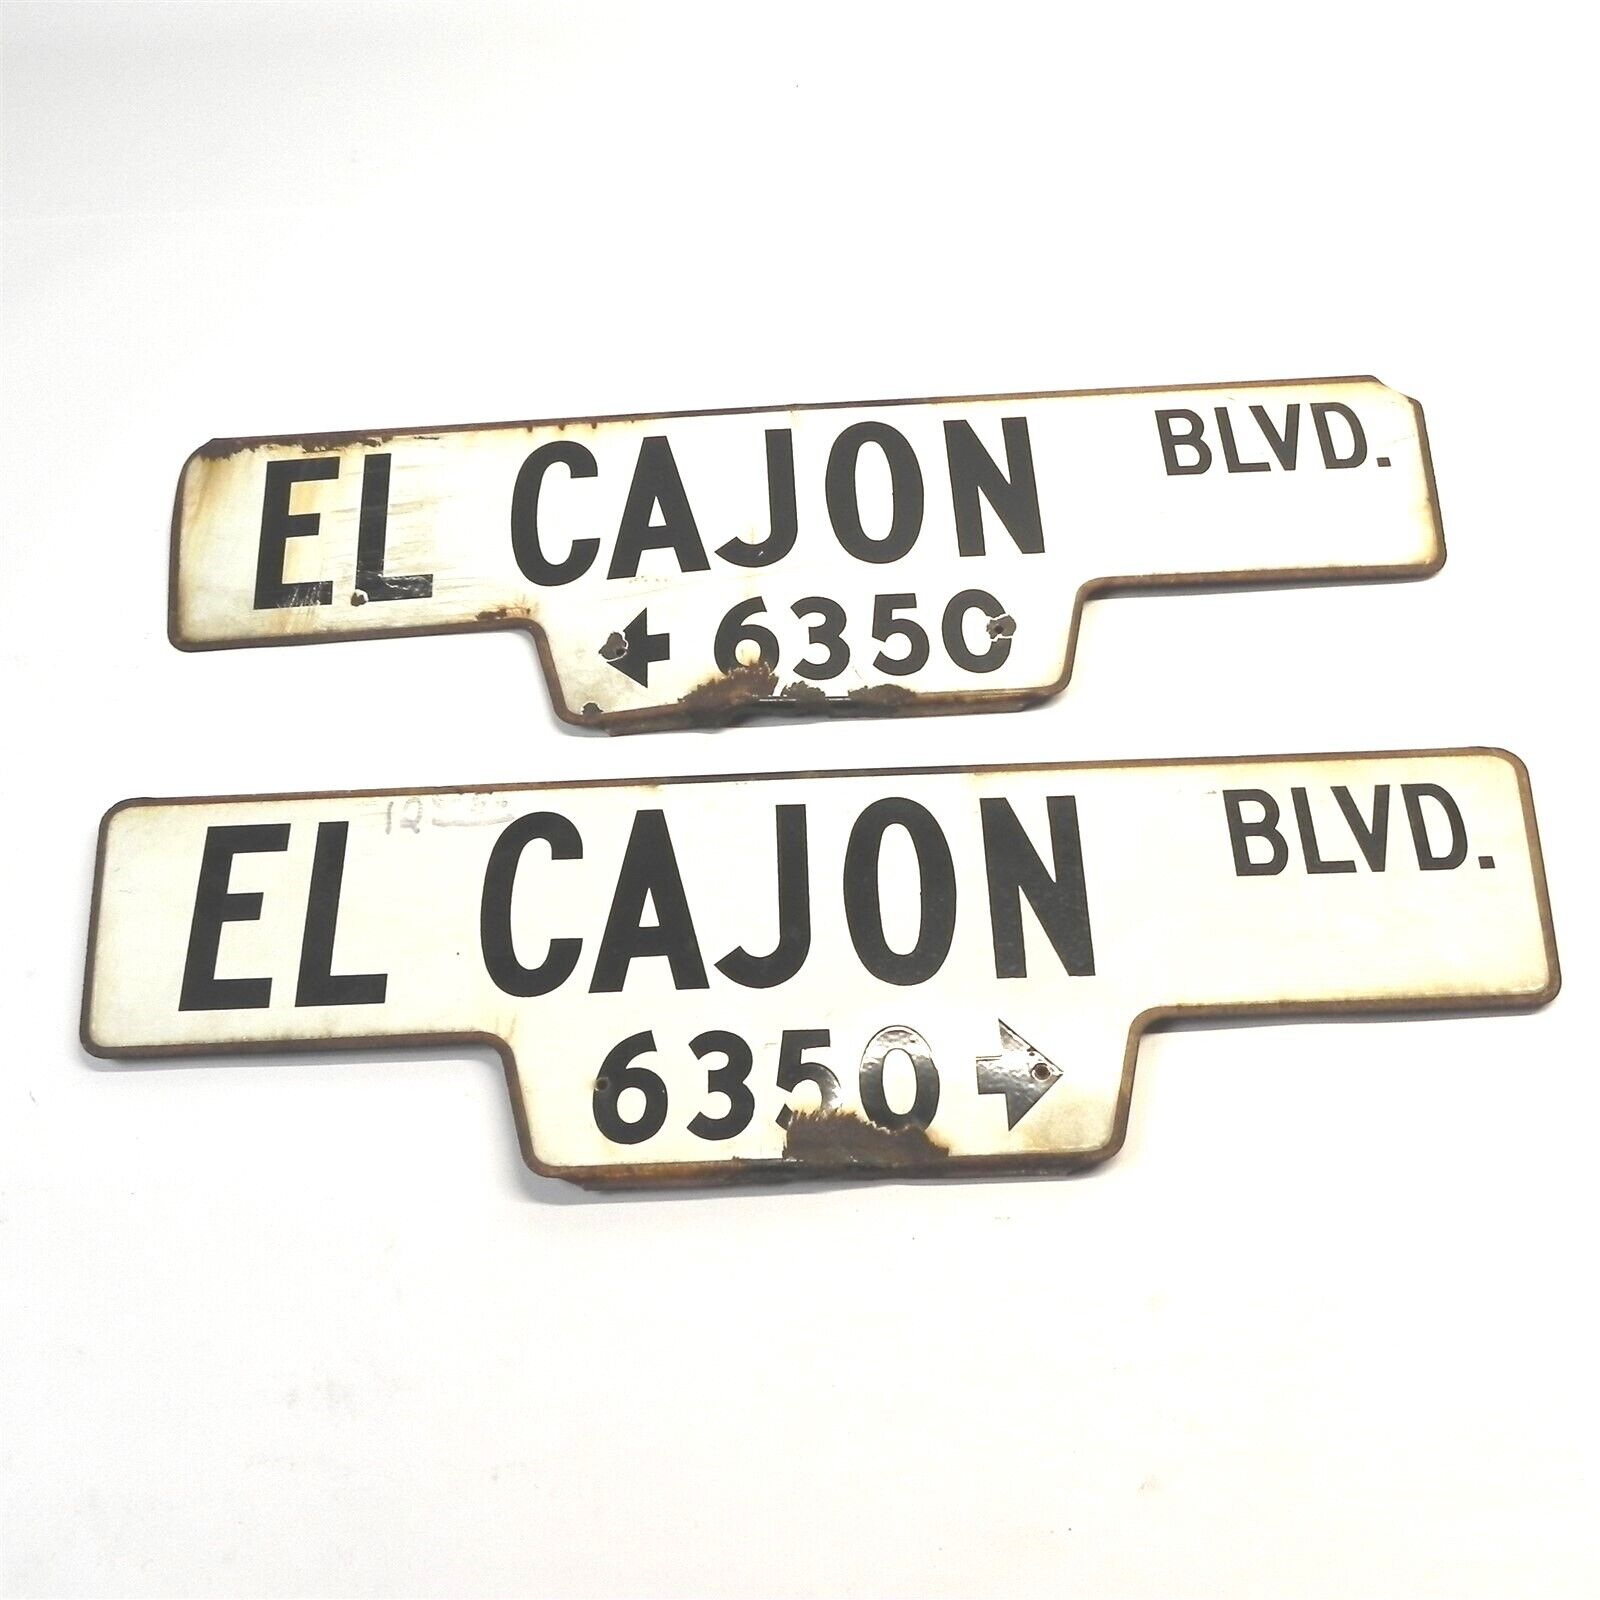 VINTAGE EL CAJON BLVD 6350 STREET SIGNS LOT OF 2 SAN DIEGO CA PRE OWNED 30